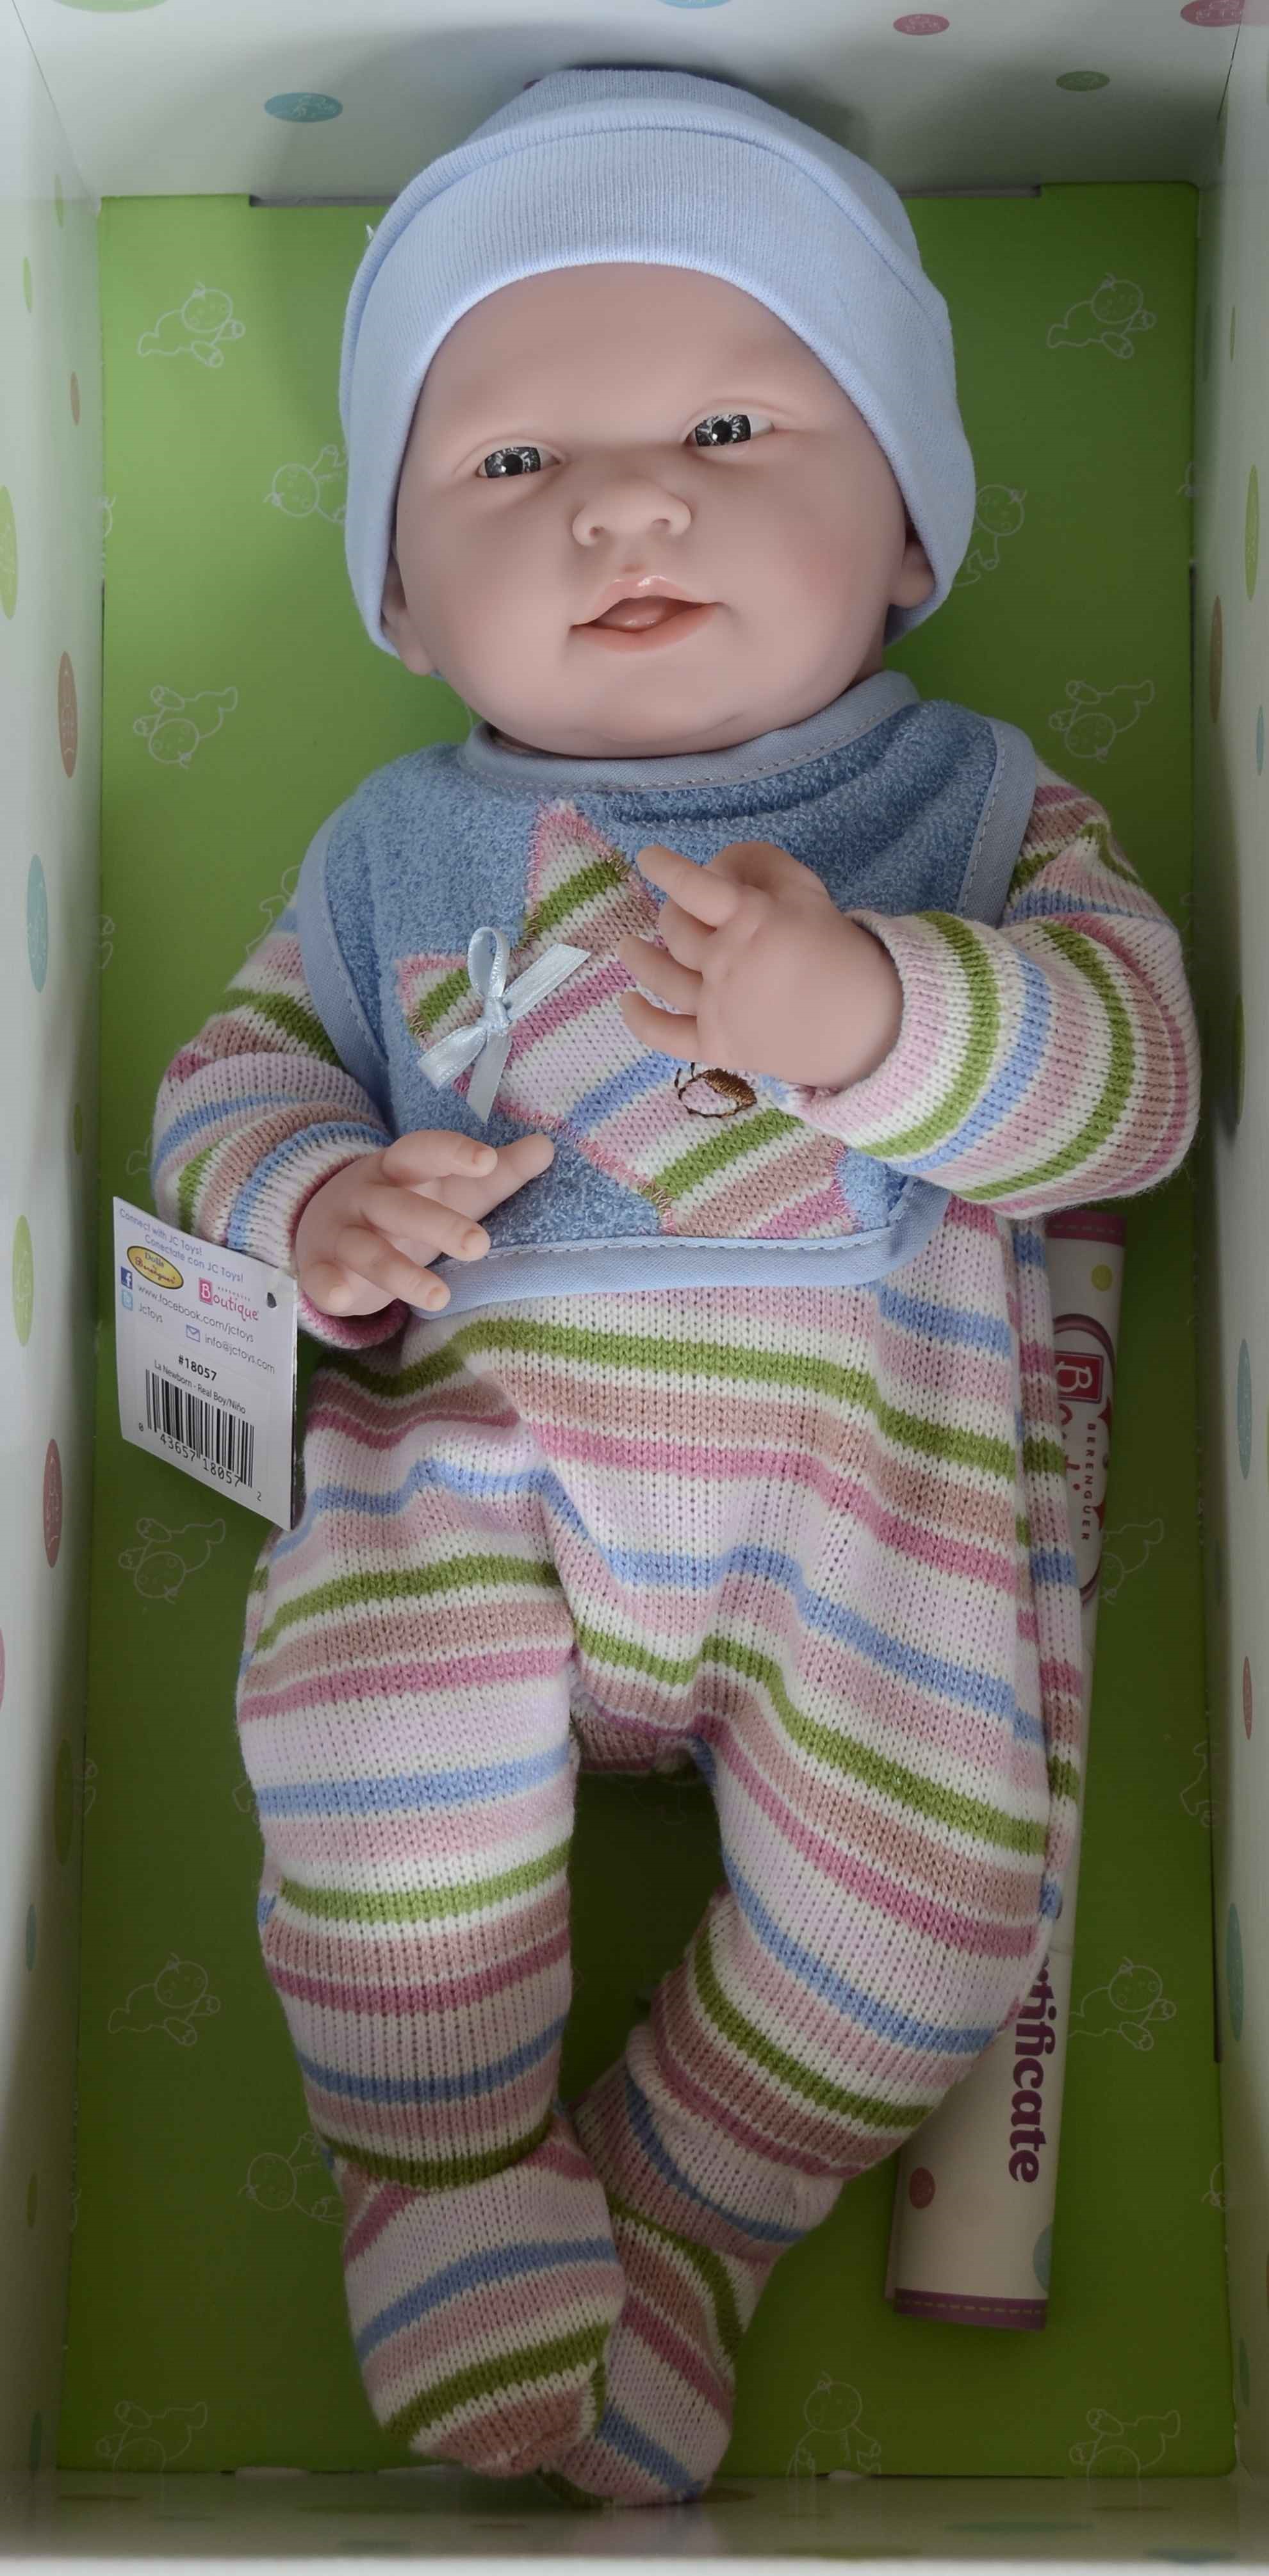 Realistické miminko - chlapeček Honzík od firmy Berenguer